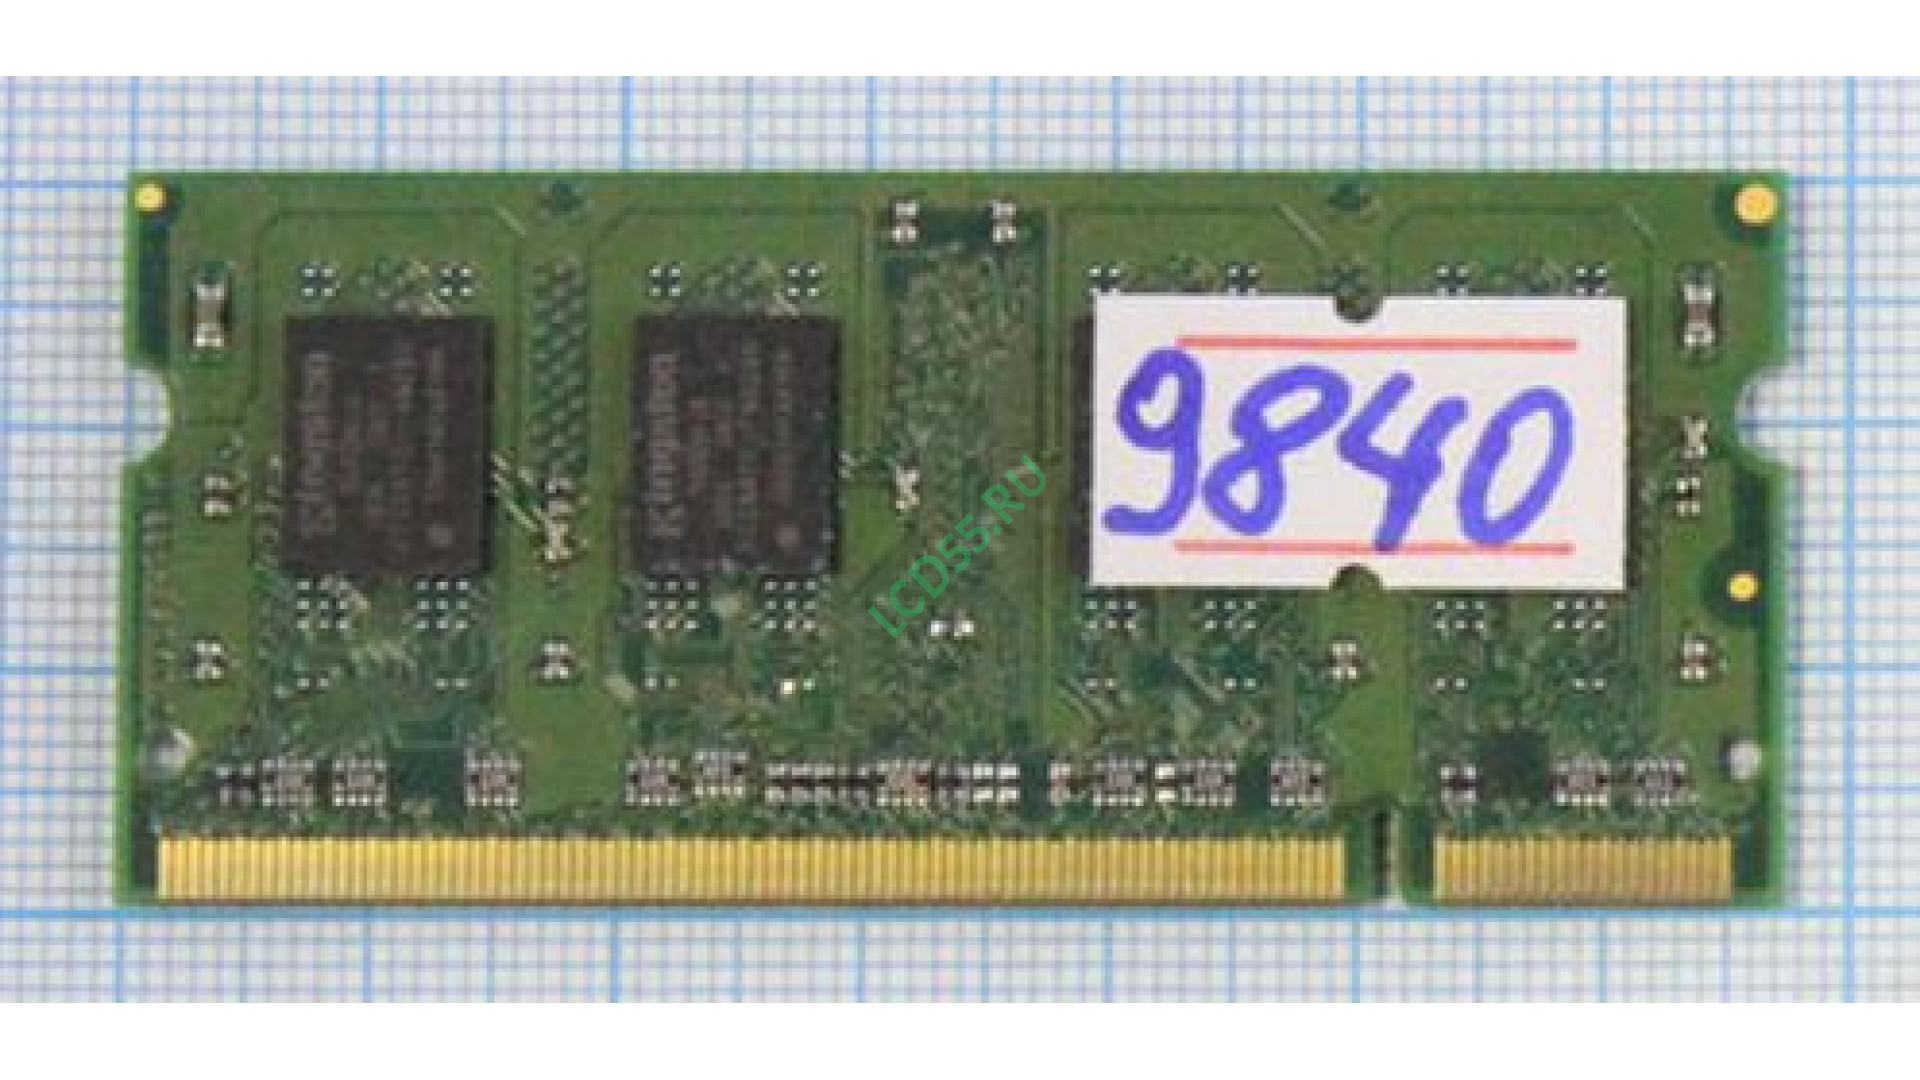 Kingston DDR-II 800Mhz SODIMM 1Gb <PC2-6400>